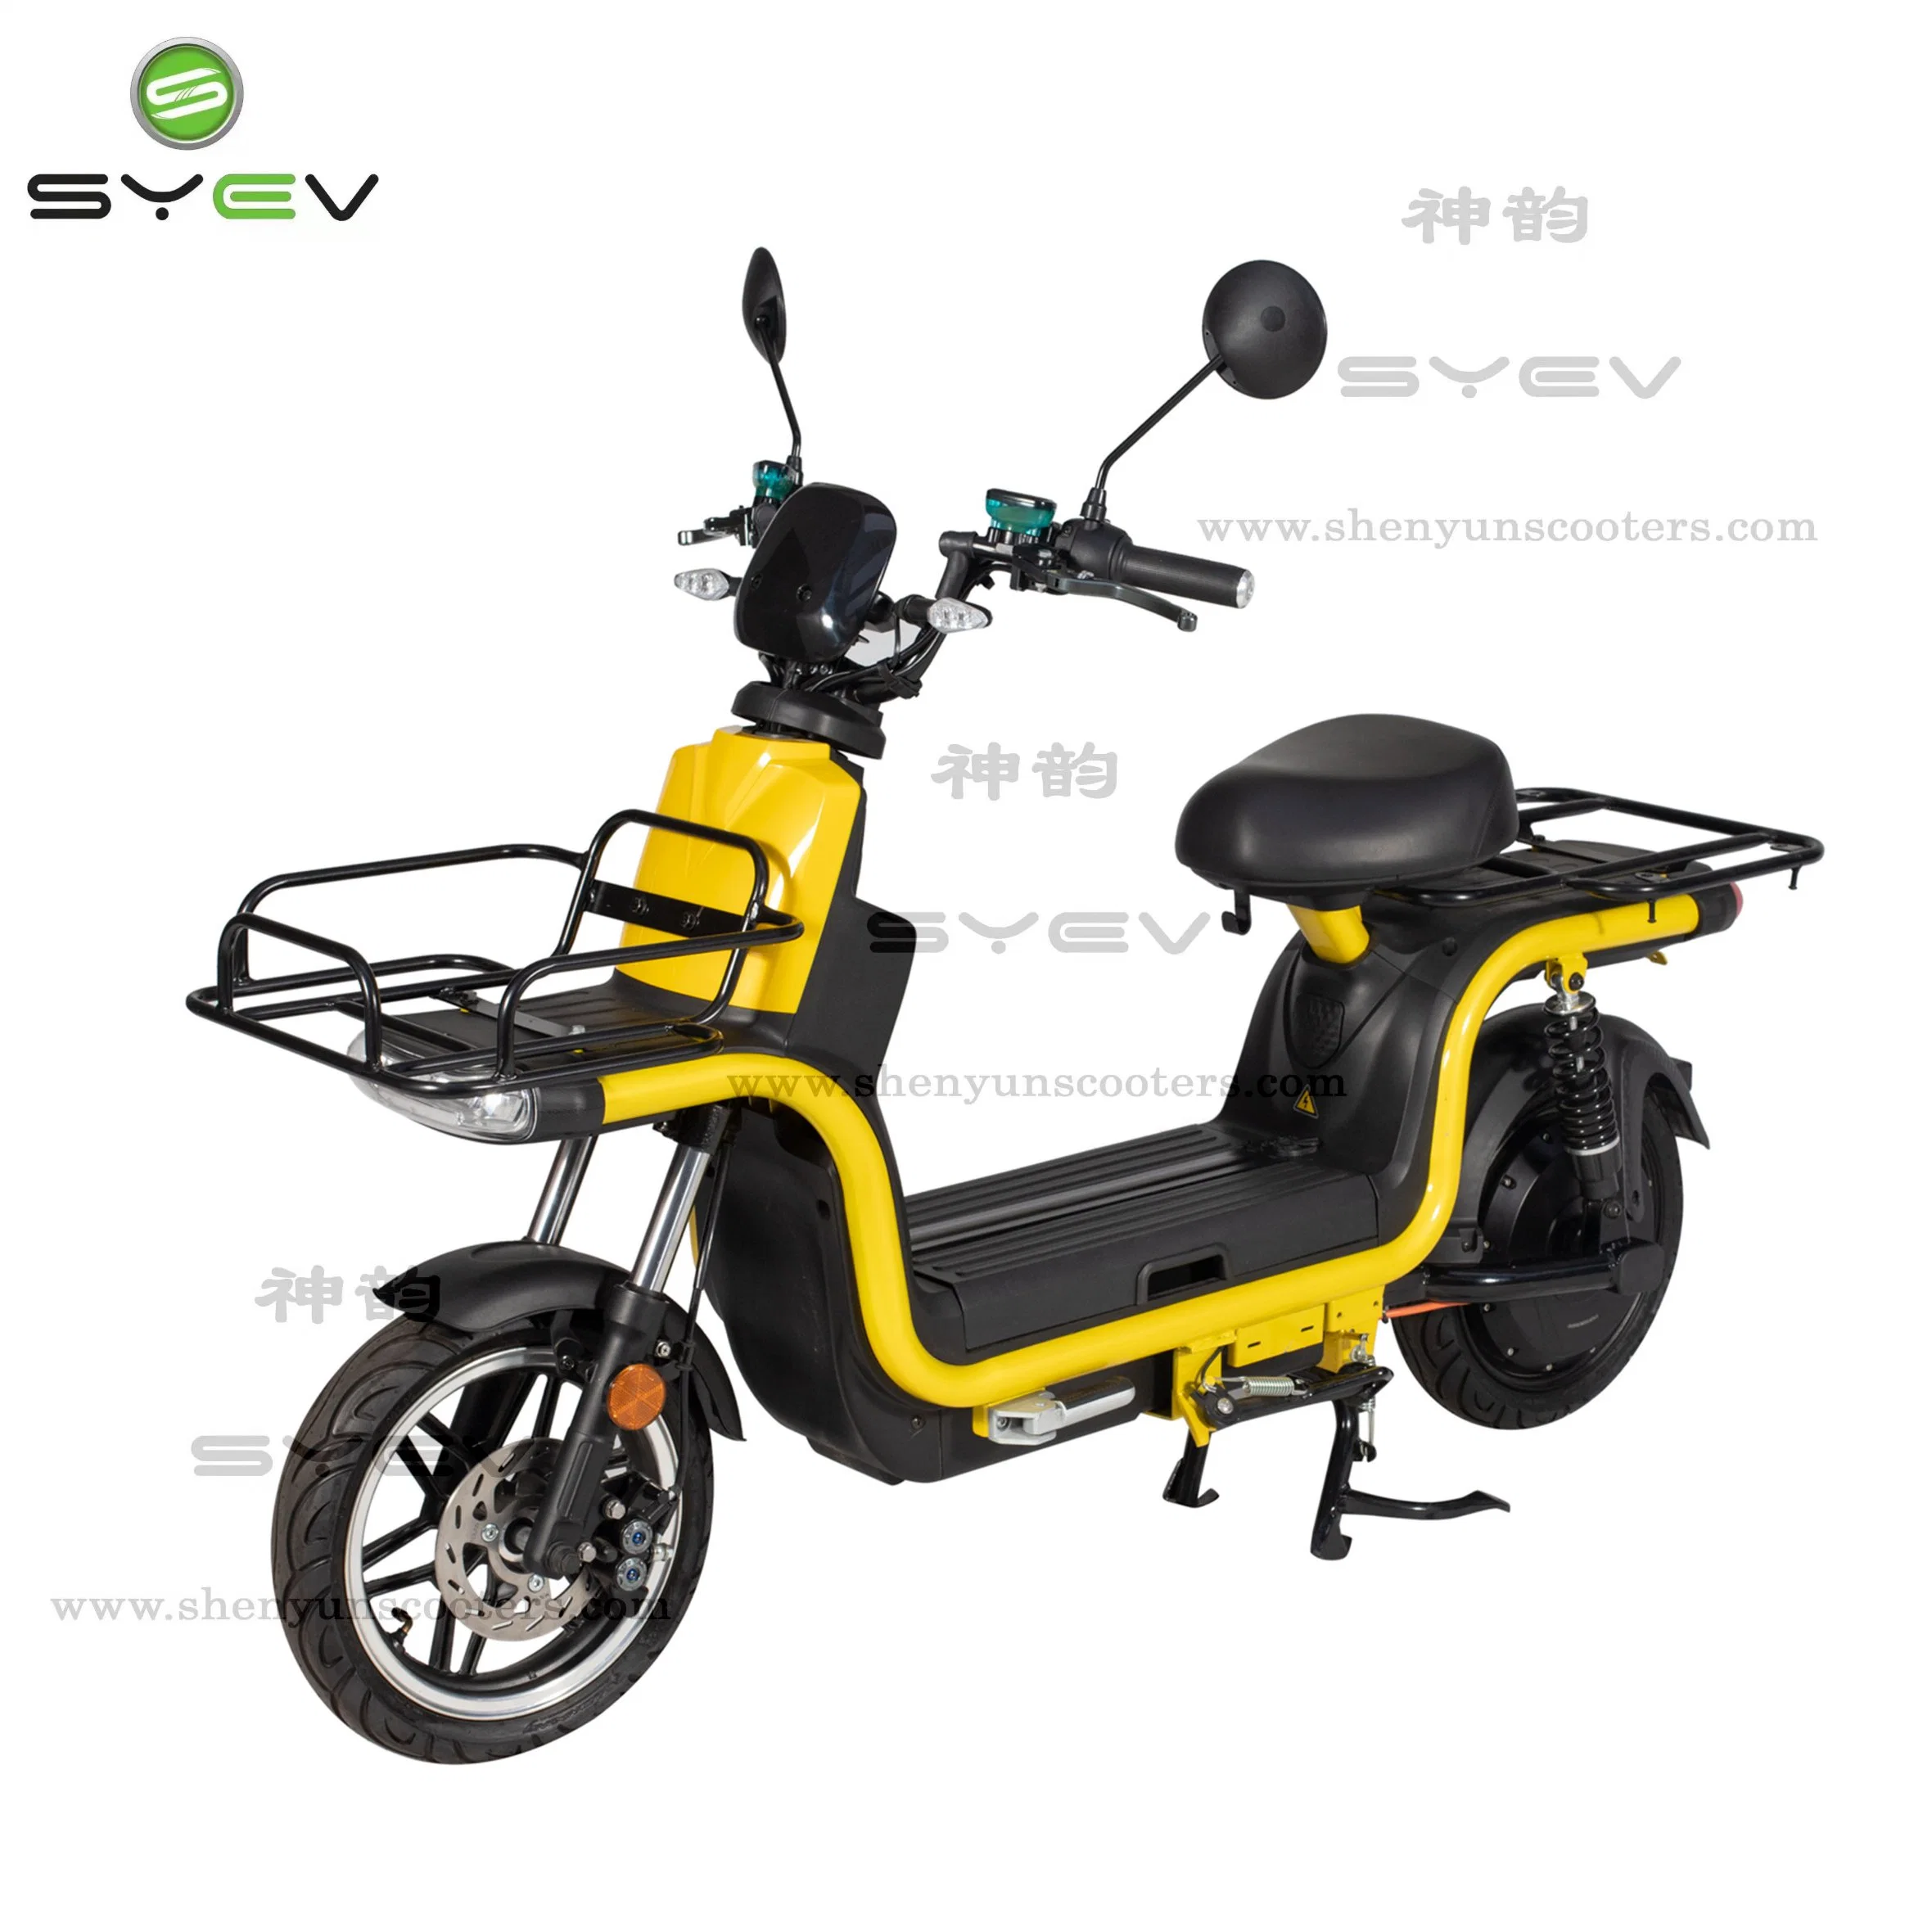 Asistencia técnica personalizada 72V de la entrega de comida caliente Scooter eléctrico e motocicleta con CEE aprobó